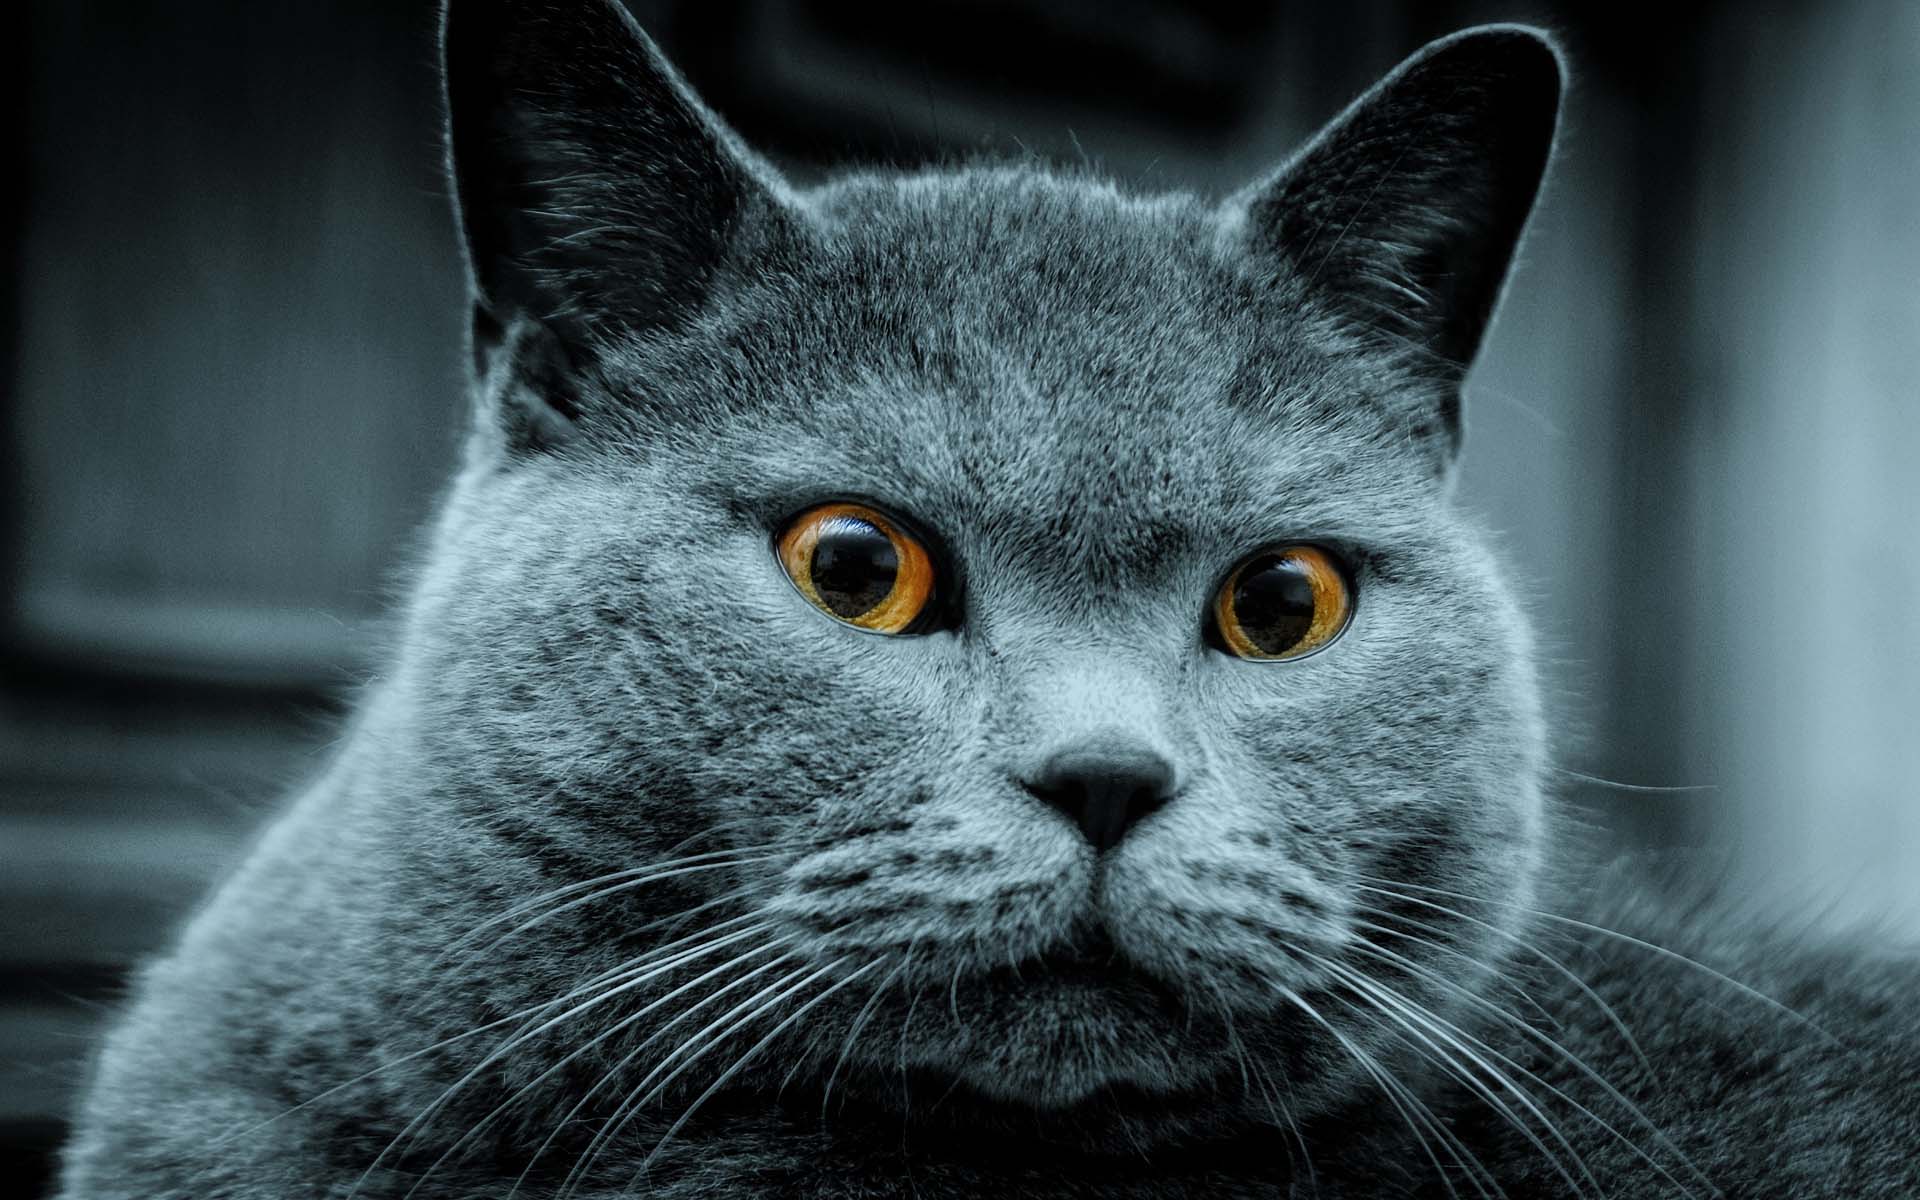 dangerous russian blue cats images picture photos download